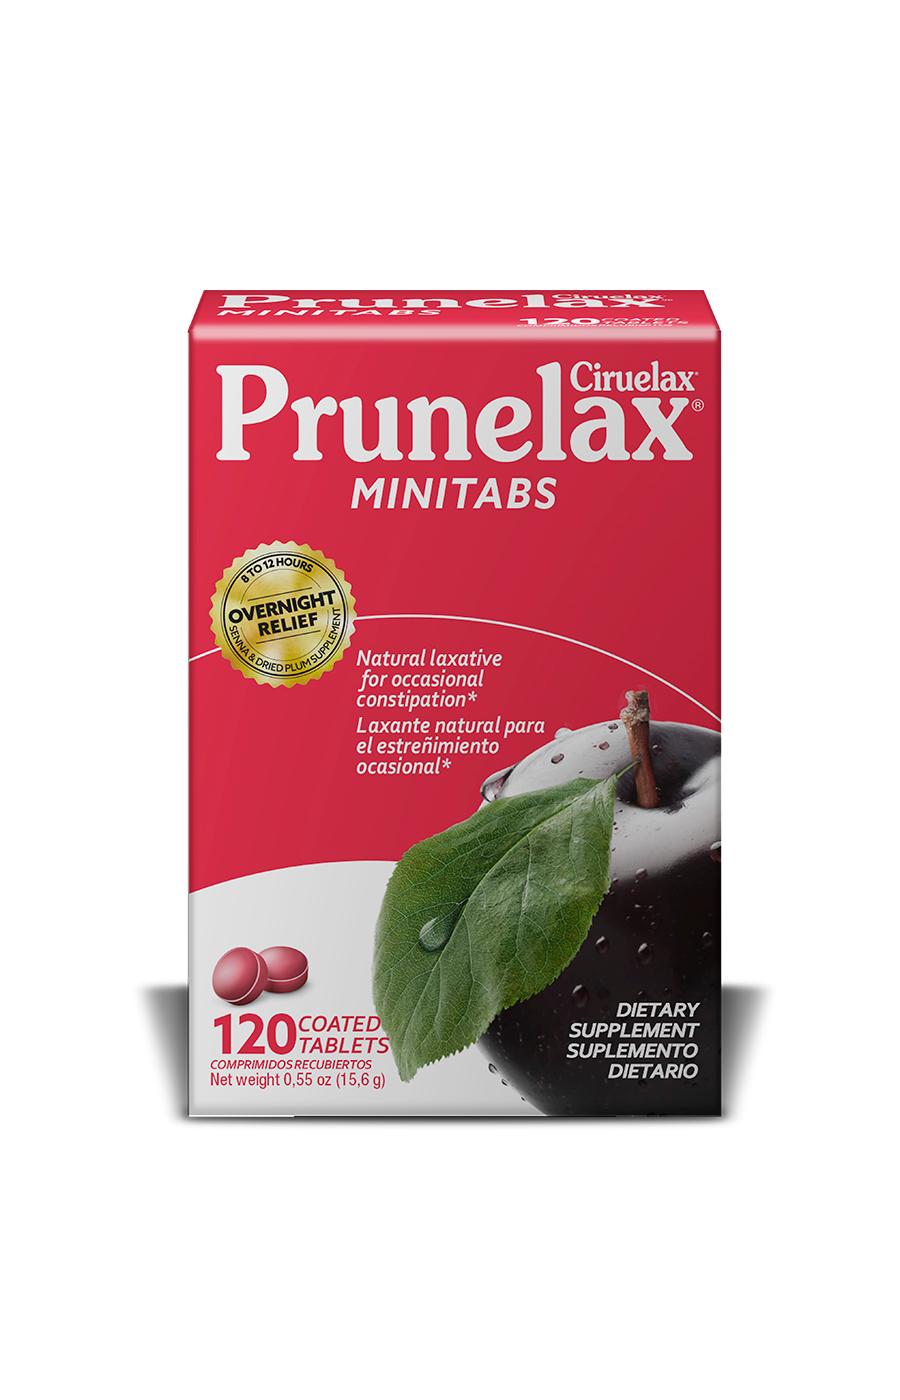 Prunelax Ciruelax Minitabs; image 1 of 2